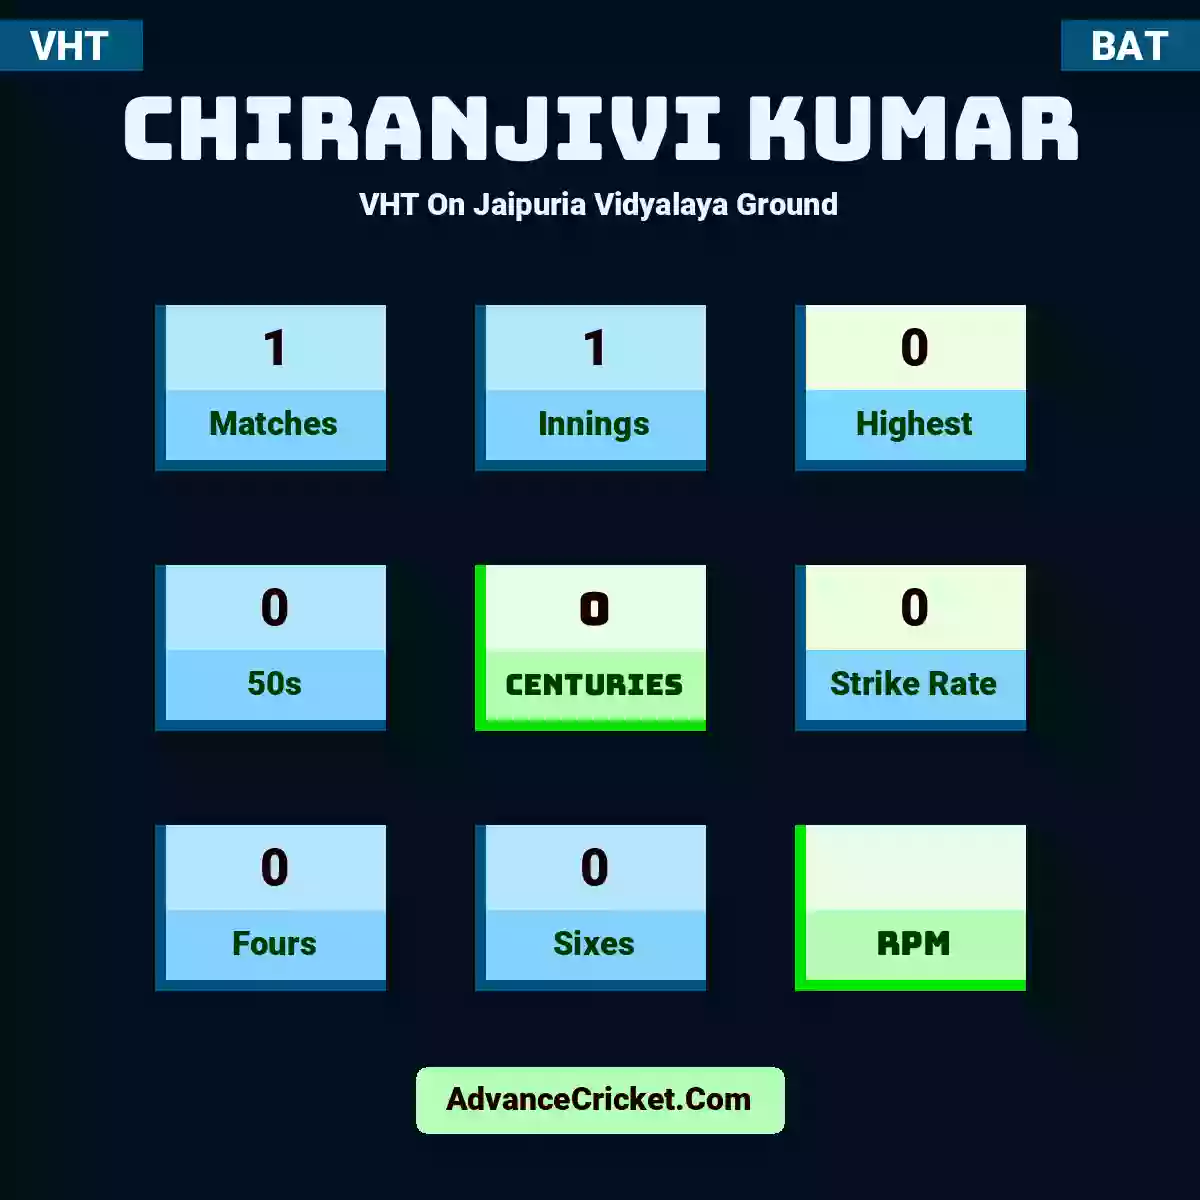 Chiranjivi Kumar VHT  On Jaipuria Vidyalaya Ground, Chiranjivi Kumar played 1 matches, scored 0 runs as highest, 0 half-centuries, and 0 centuries, with a strike rate of 0. C.Kumar hit 0 fours and 0 sixes.